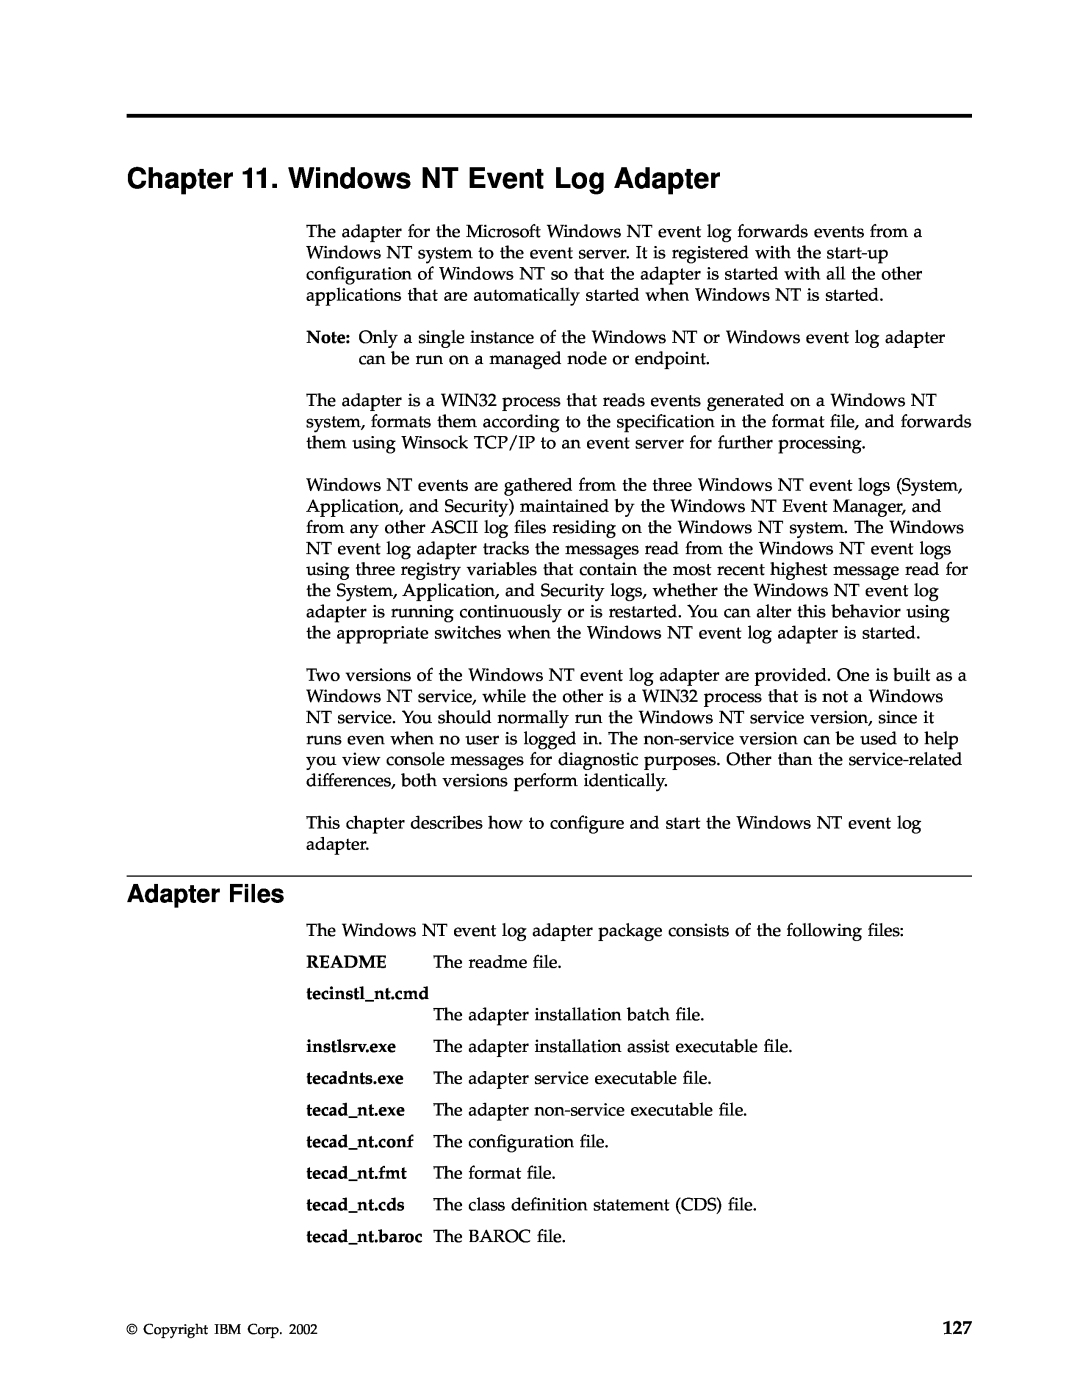 IBM Enterprise Console manual Windows NT Event Log Adapter, Adapter Files 